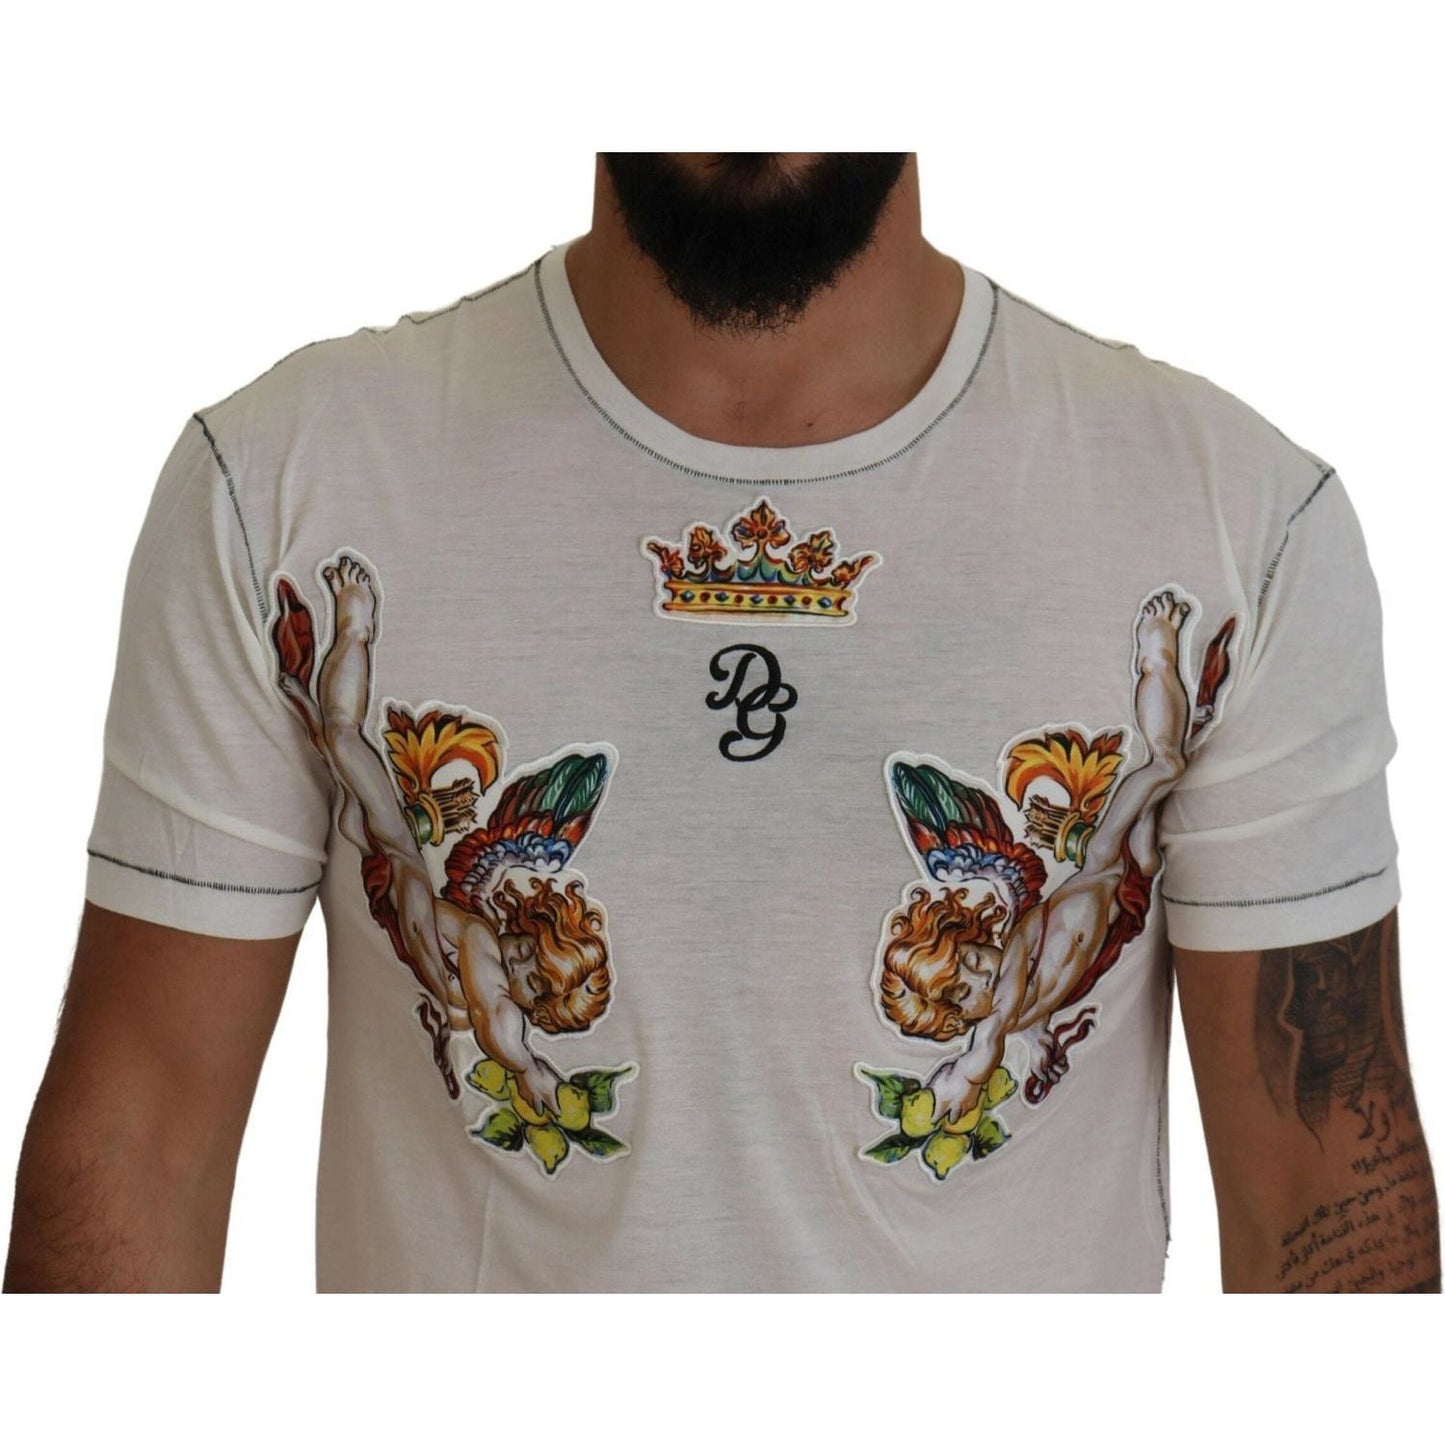 Dolce & Gabbana Elegant White Cotton-Silk Blend Tee white-printed-short-sleeves-men-t-shirt-1